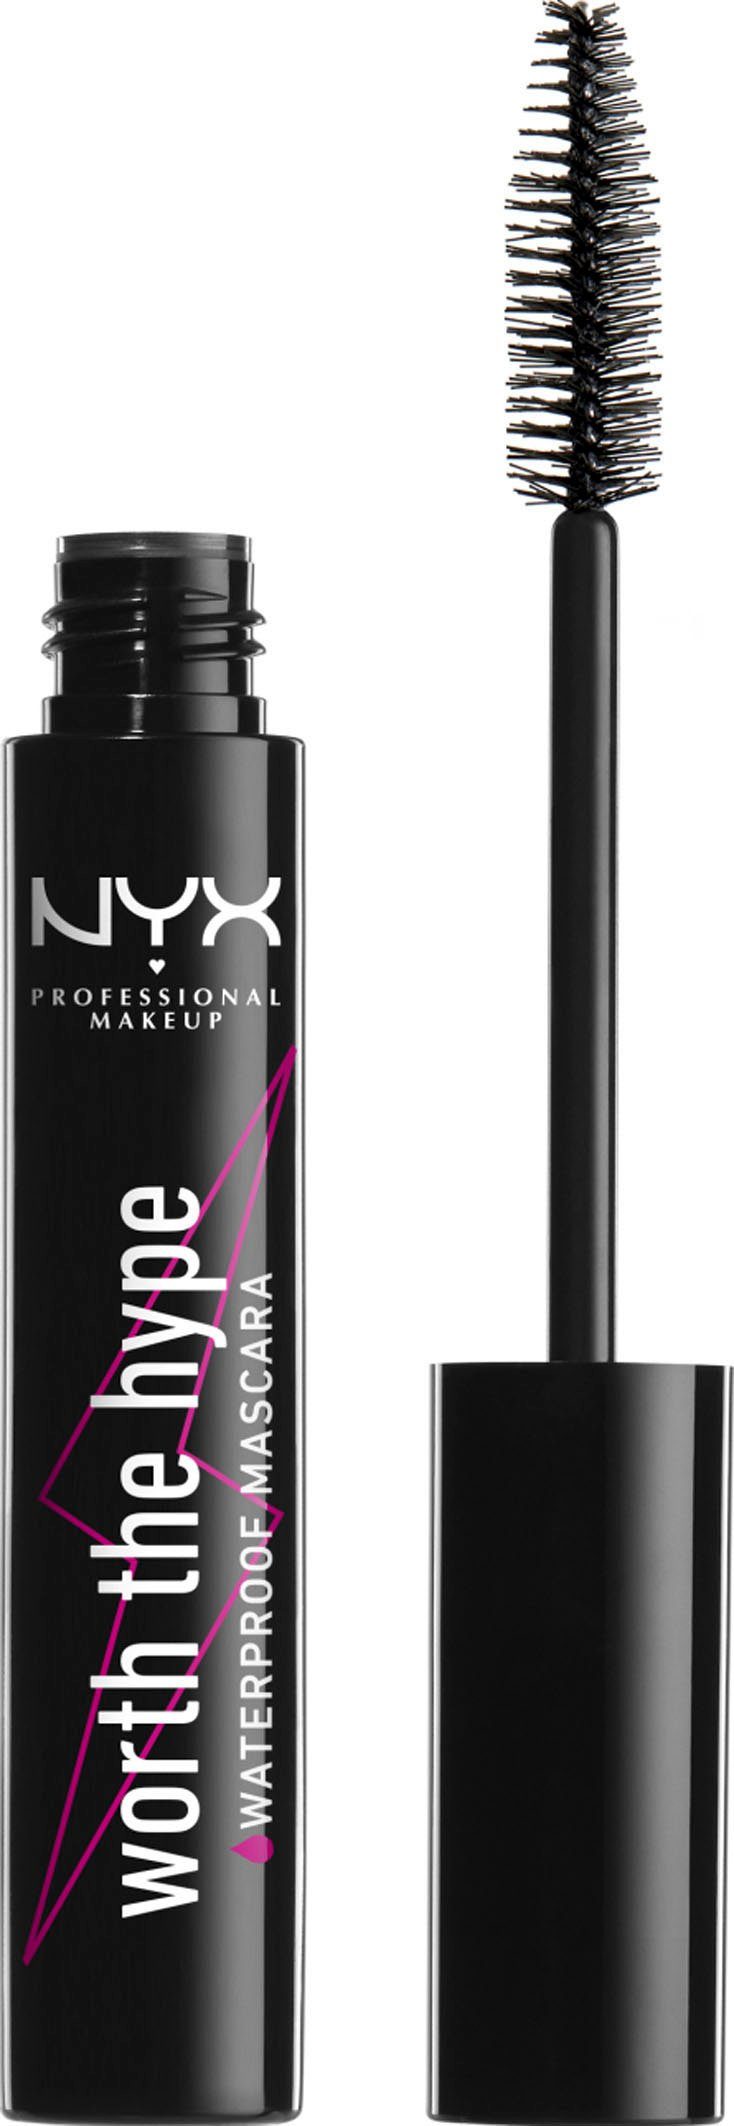 NYX Mascara Professional Makeup Worth The Hype Mascara Waterproof